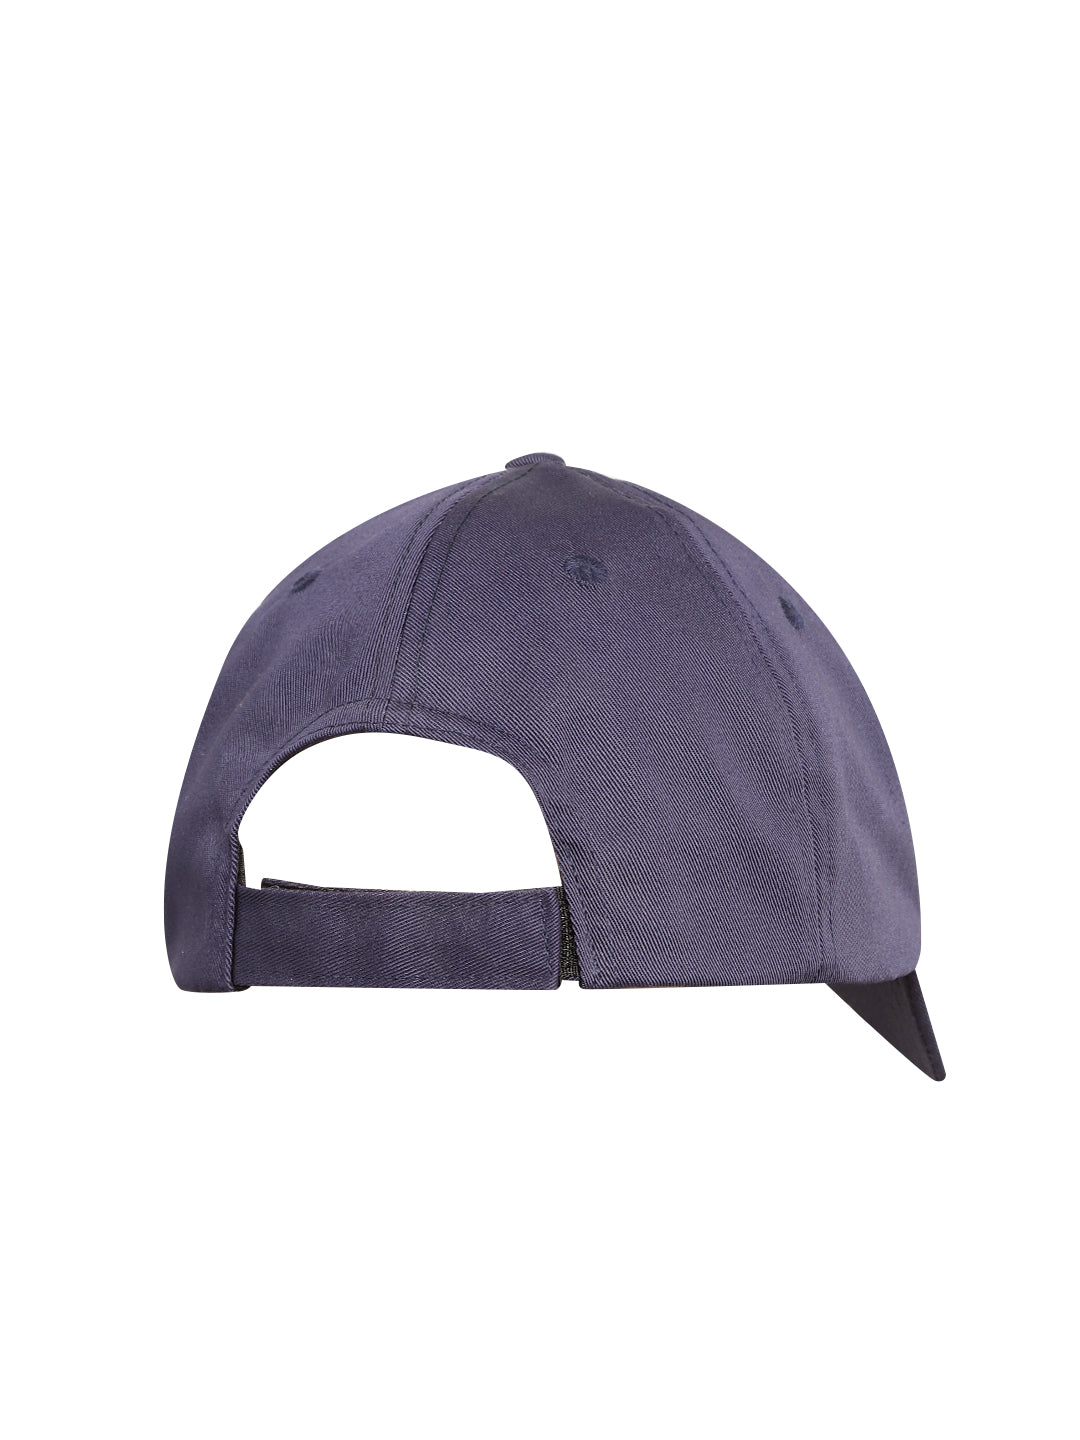 Blueberry navy blue INFLUENCER baseball cap